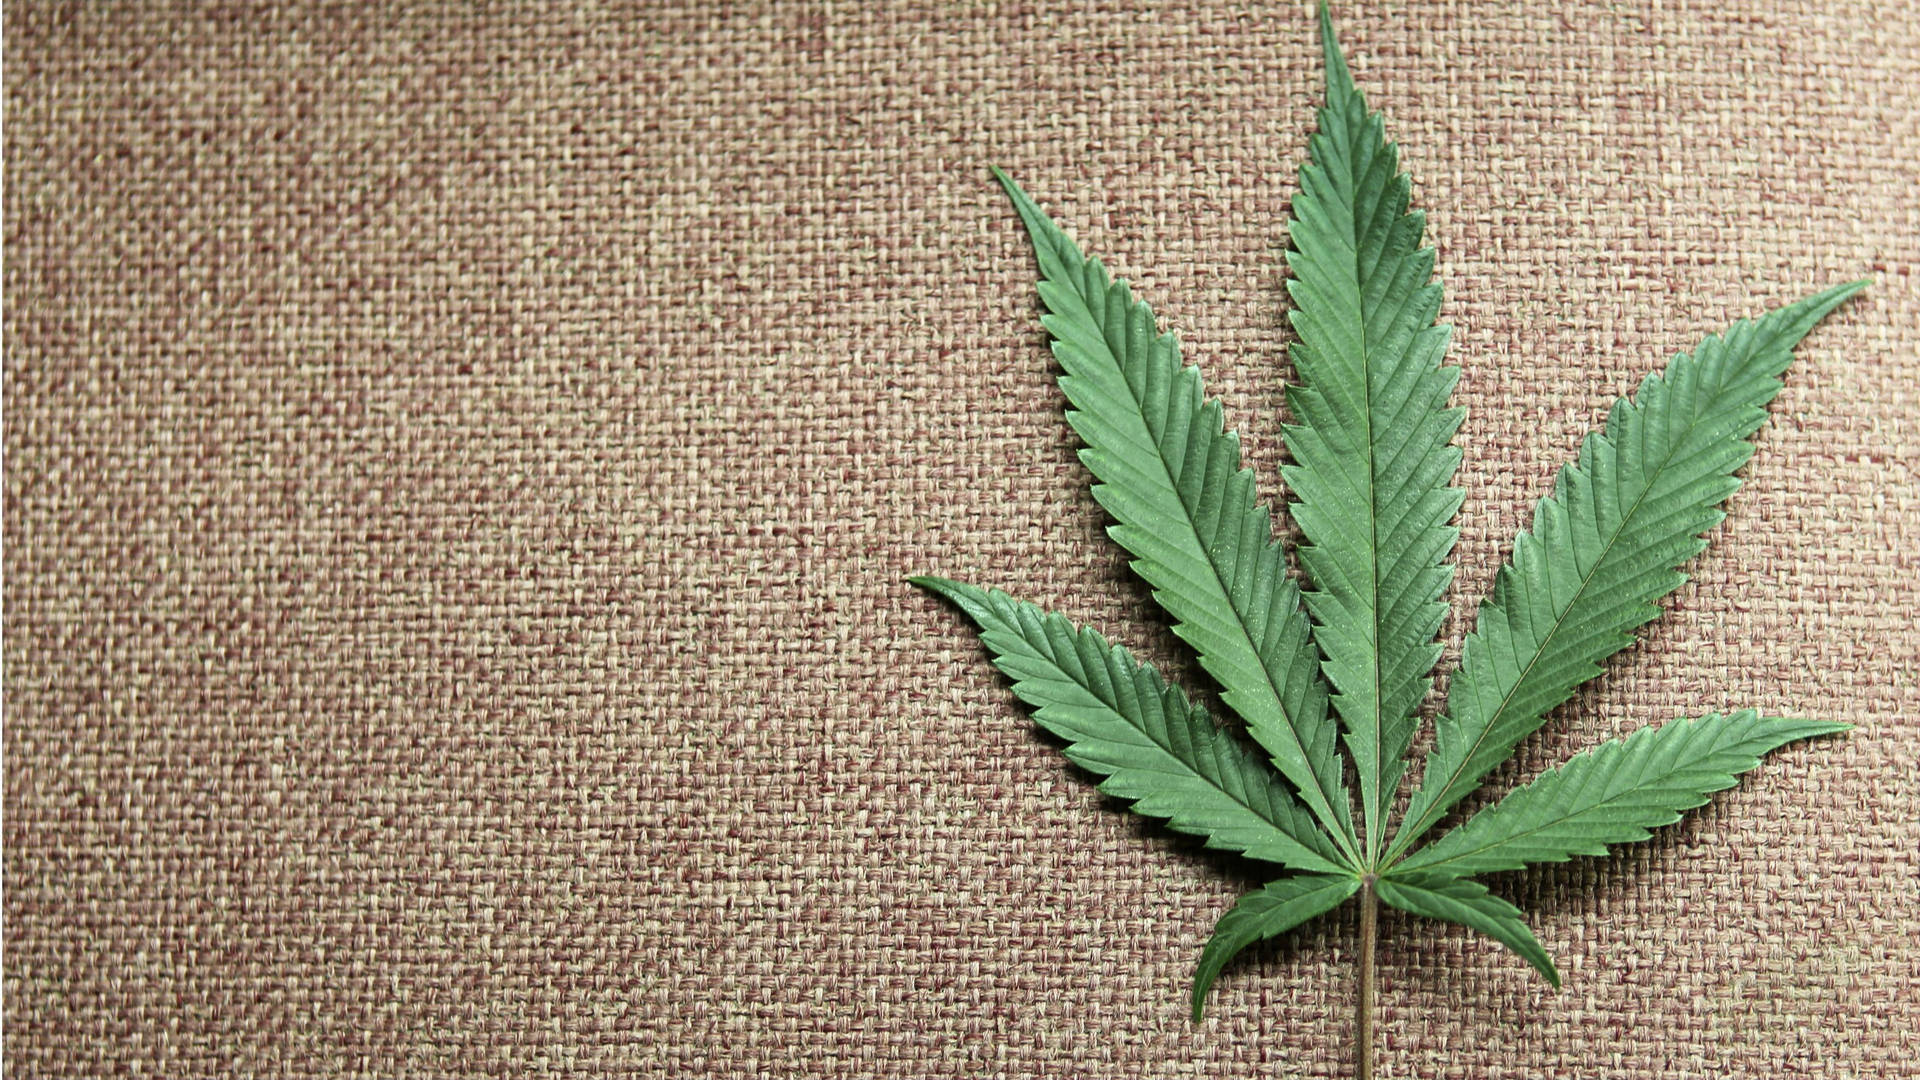 Marijuana Leaf Flatlay Wallpaper